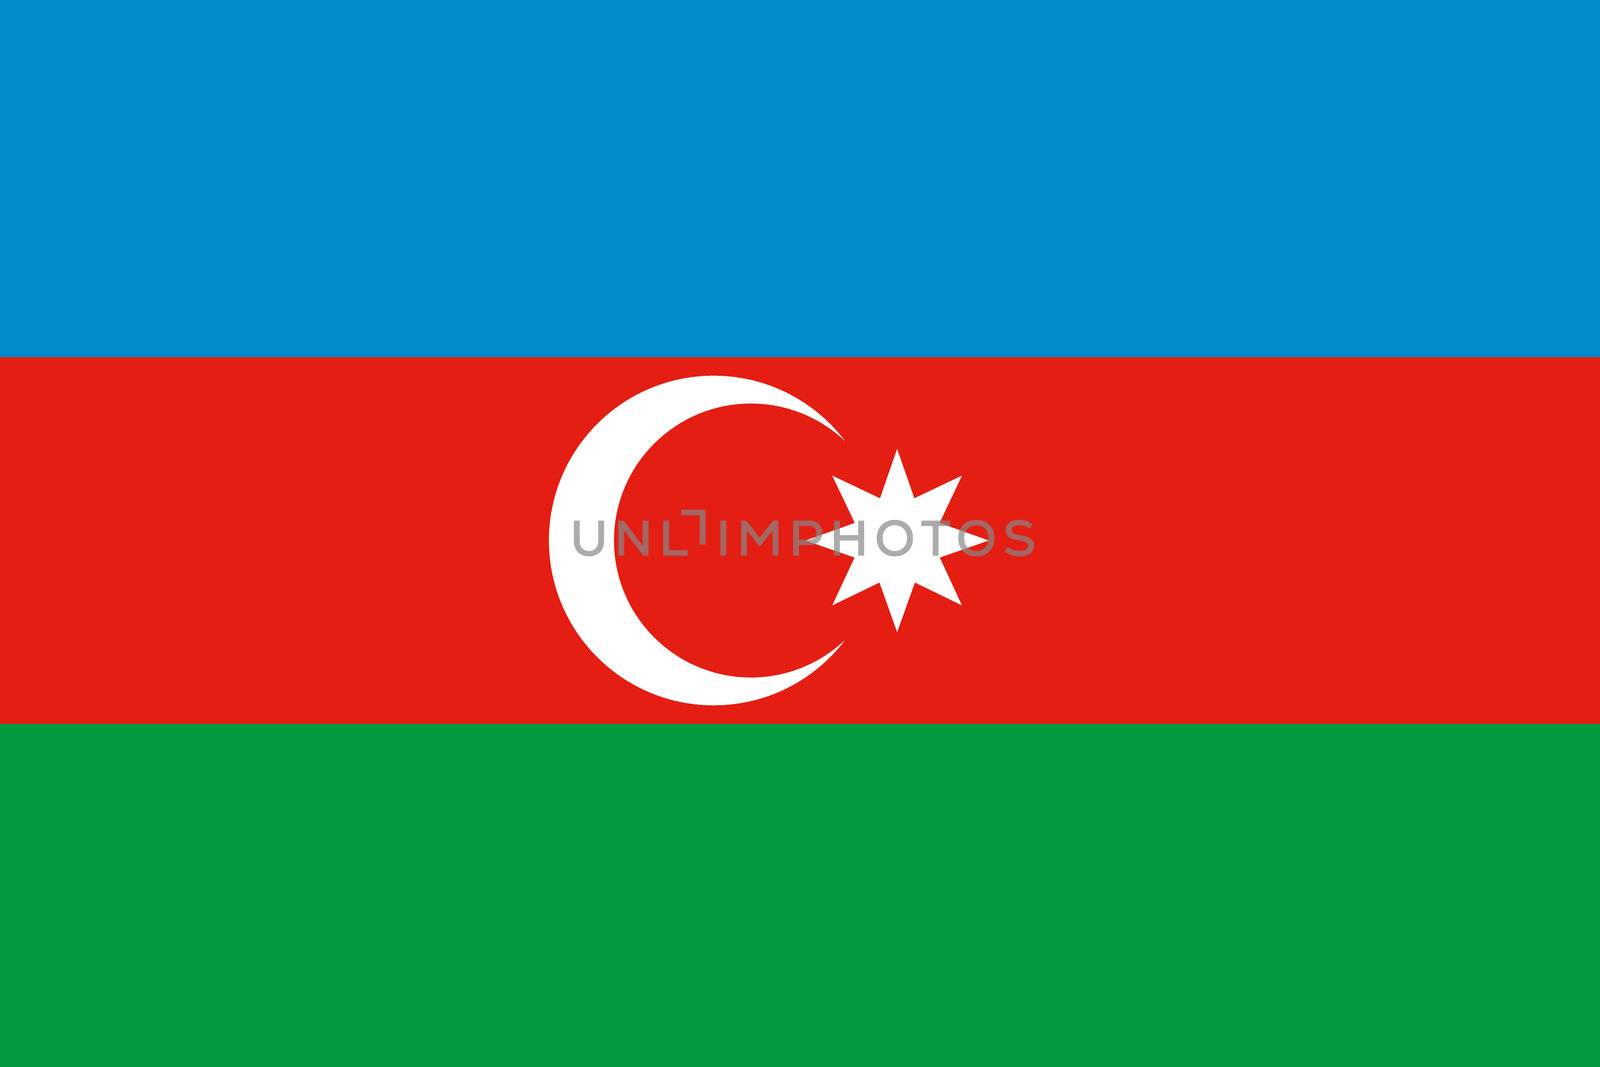 An illustration of the flag of Azerbaijan